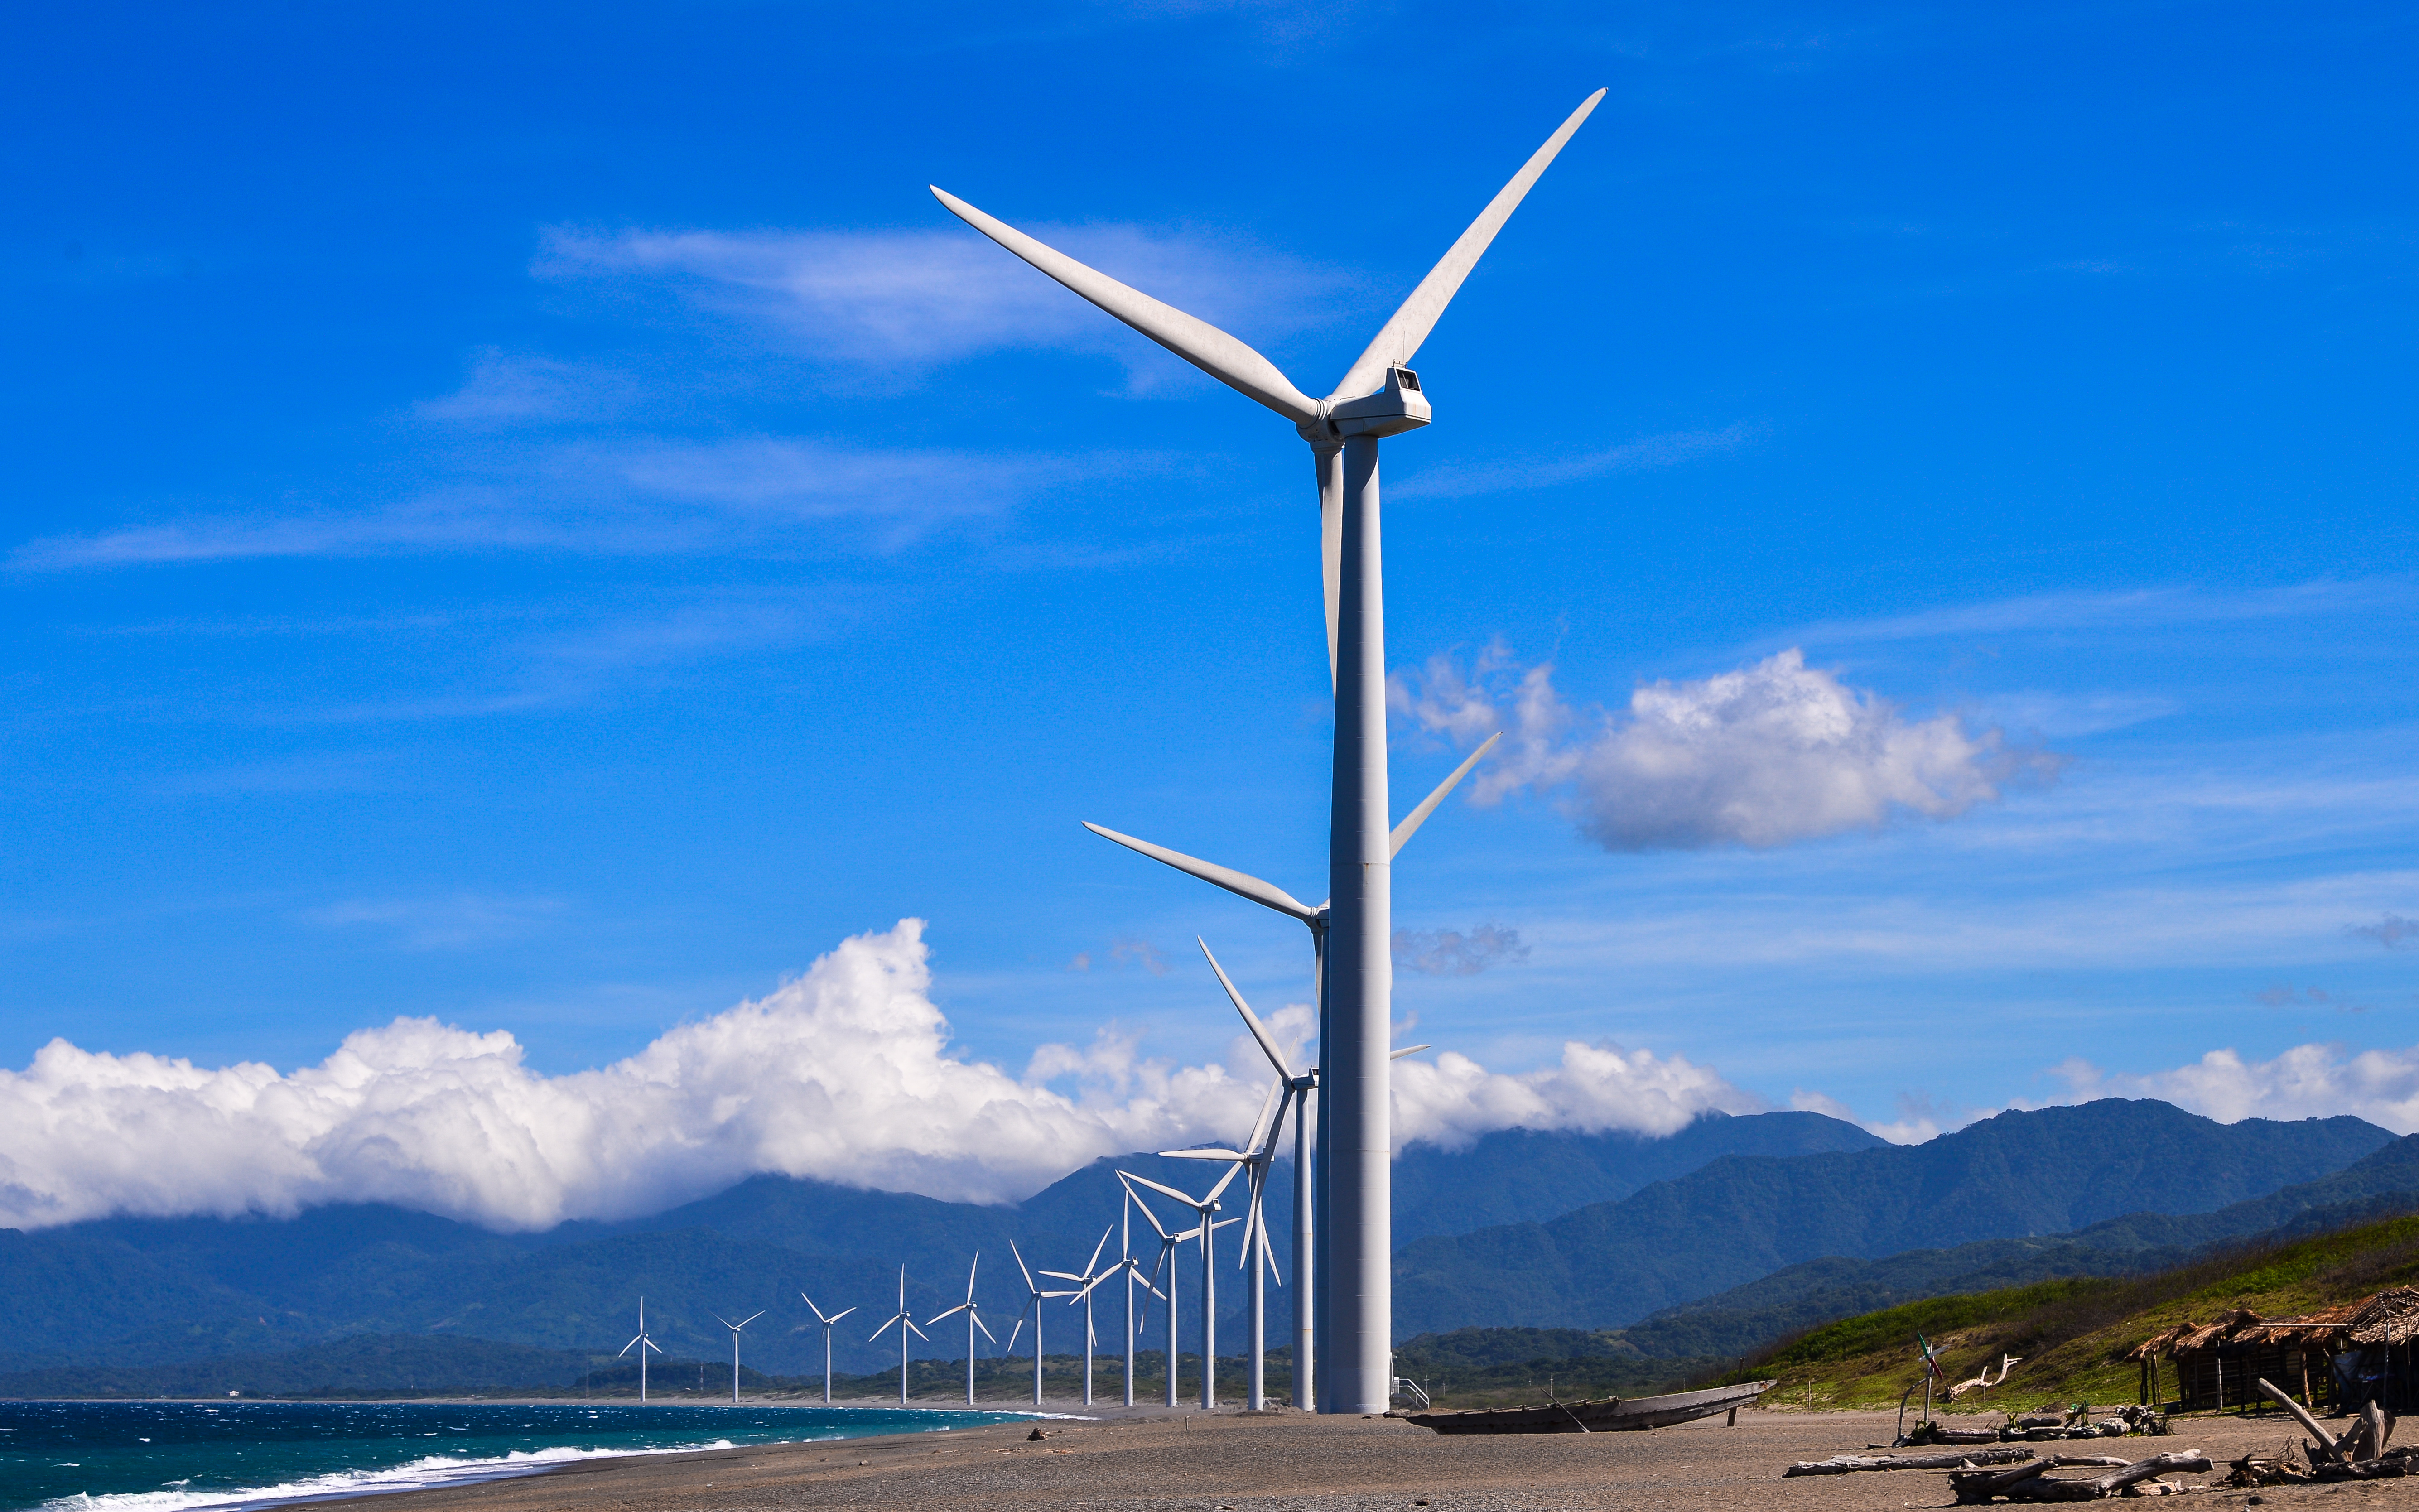 Bangui Windmills is one of the top tourist spots in Ilocos Norte